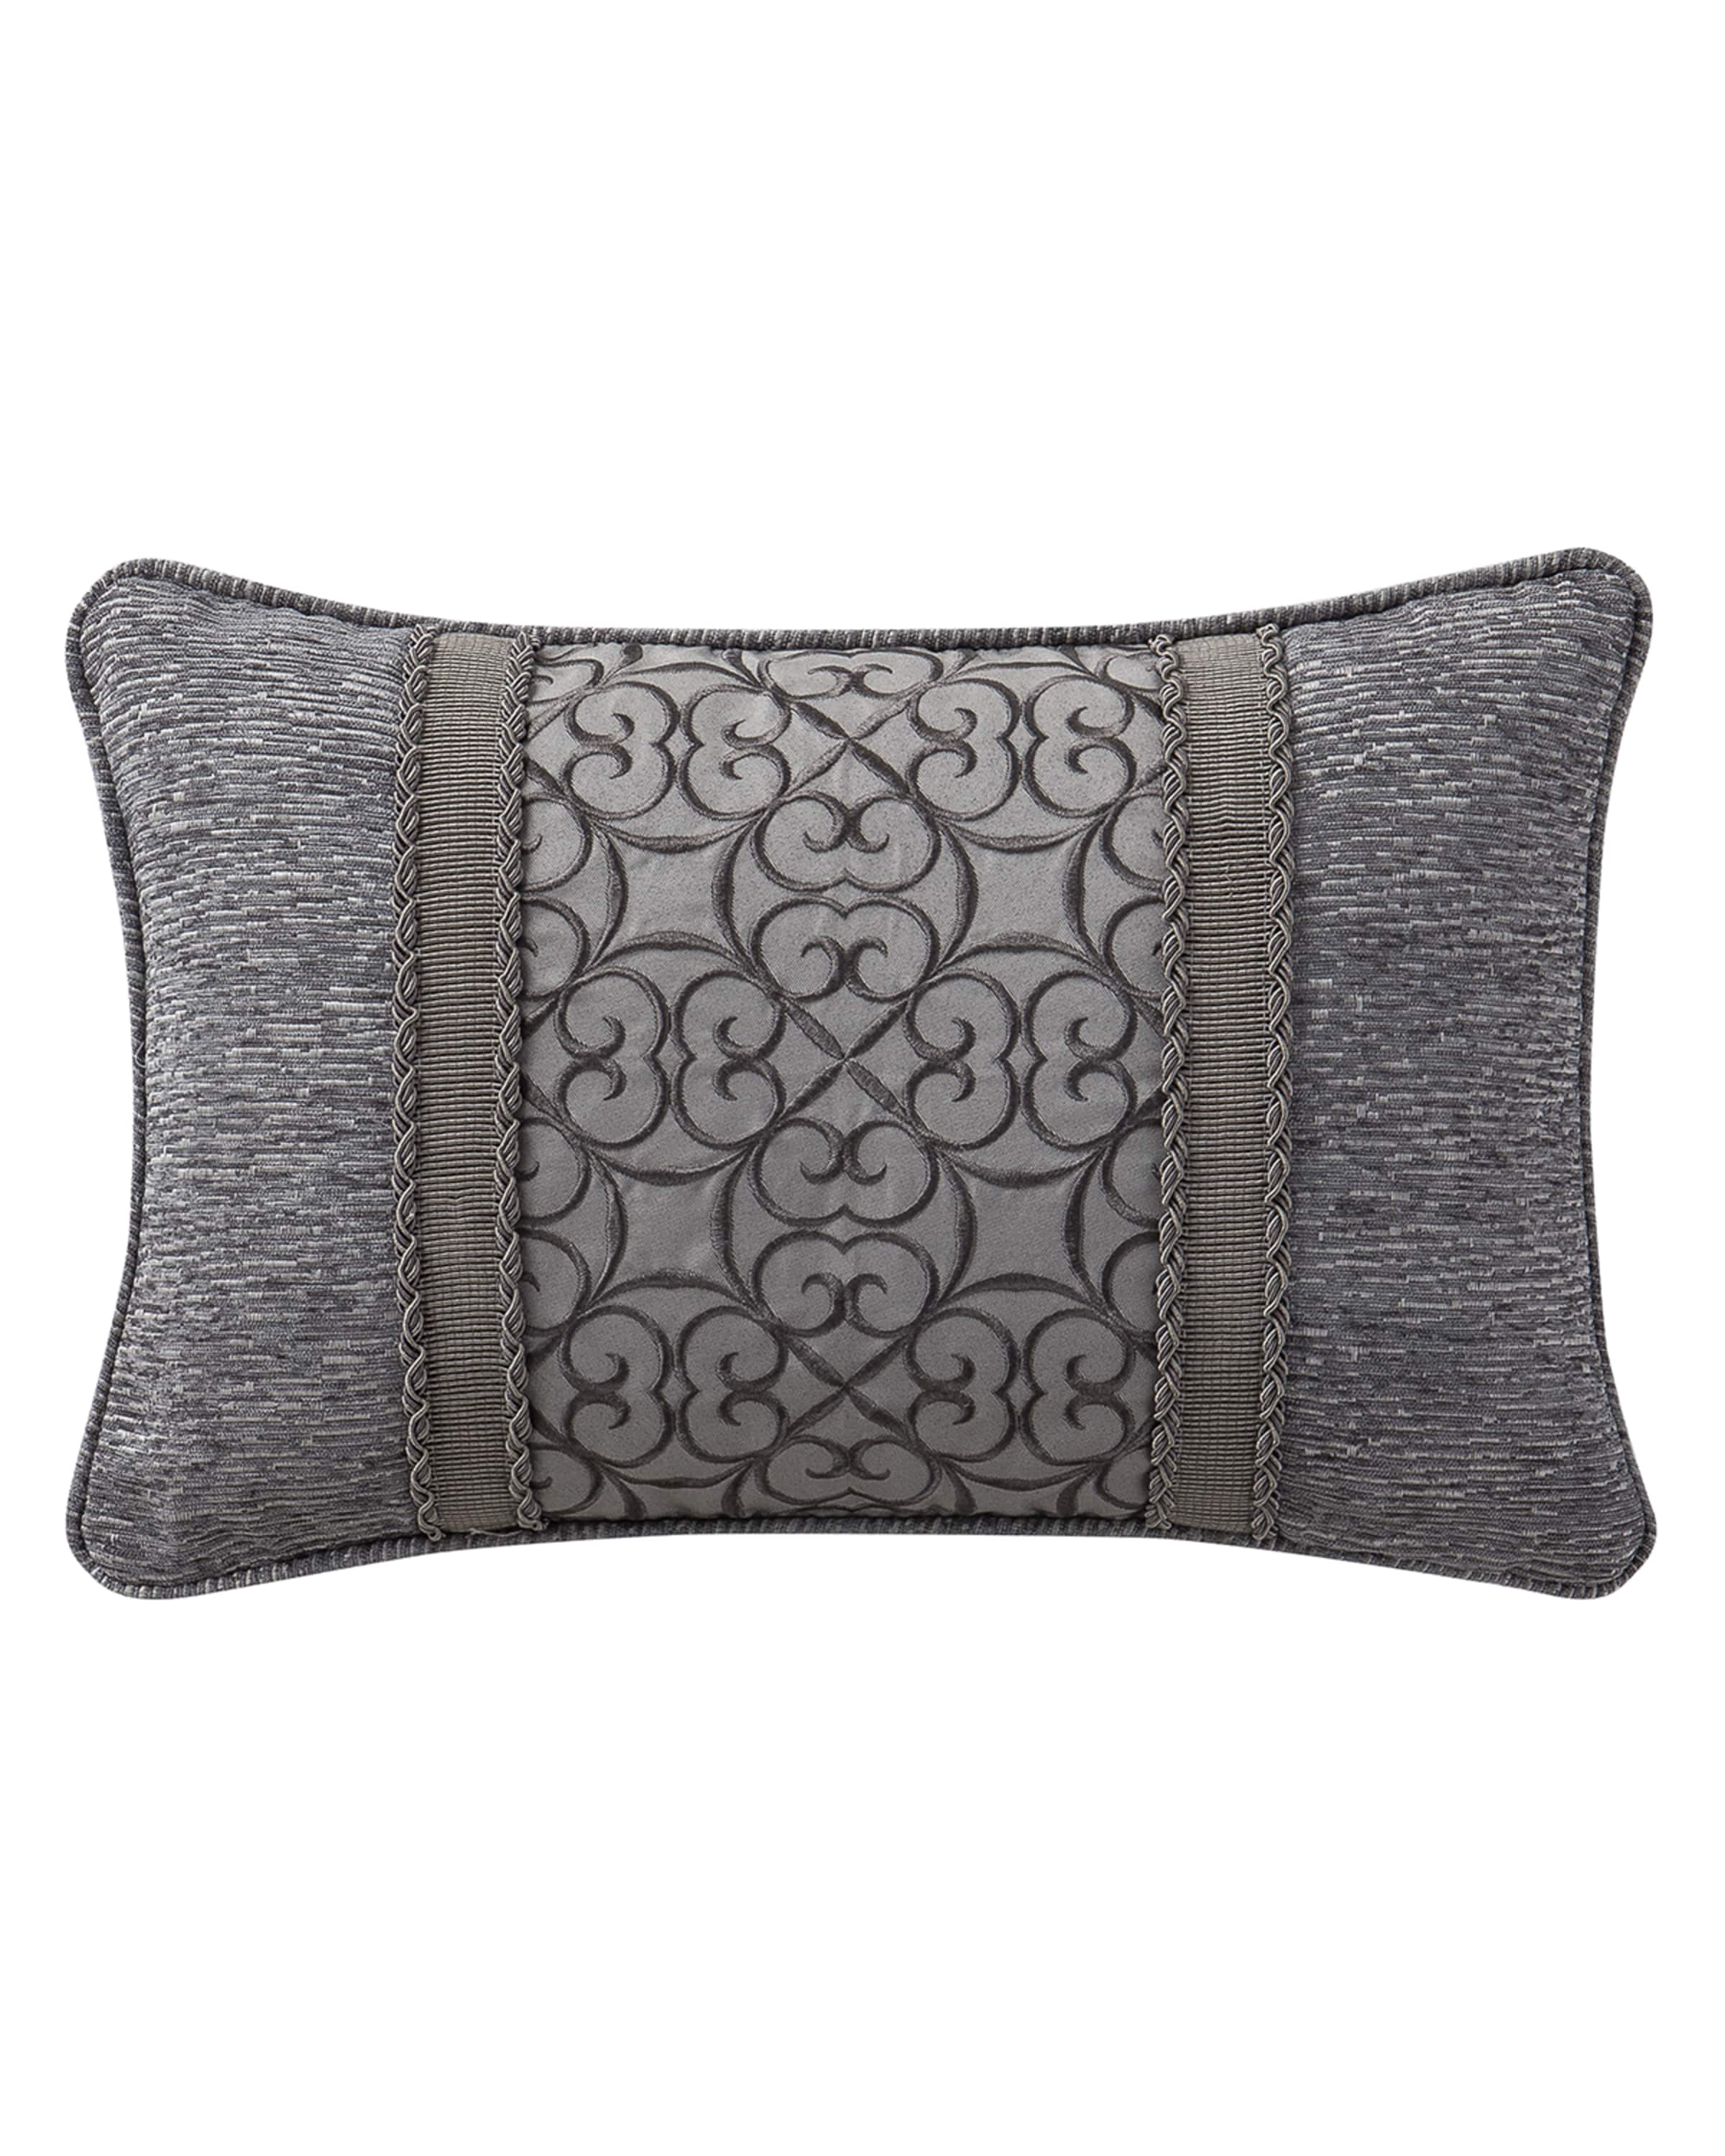 Waterford Carrick 12x18 Decorative Pillow